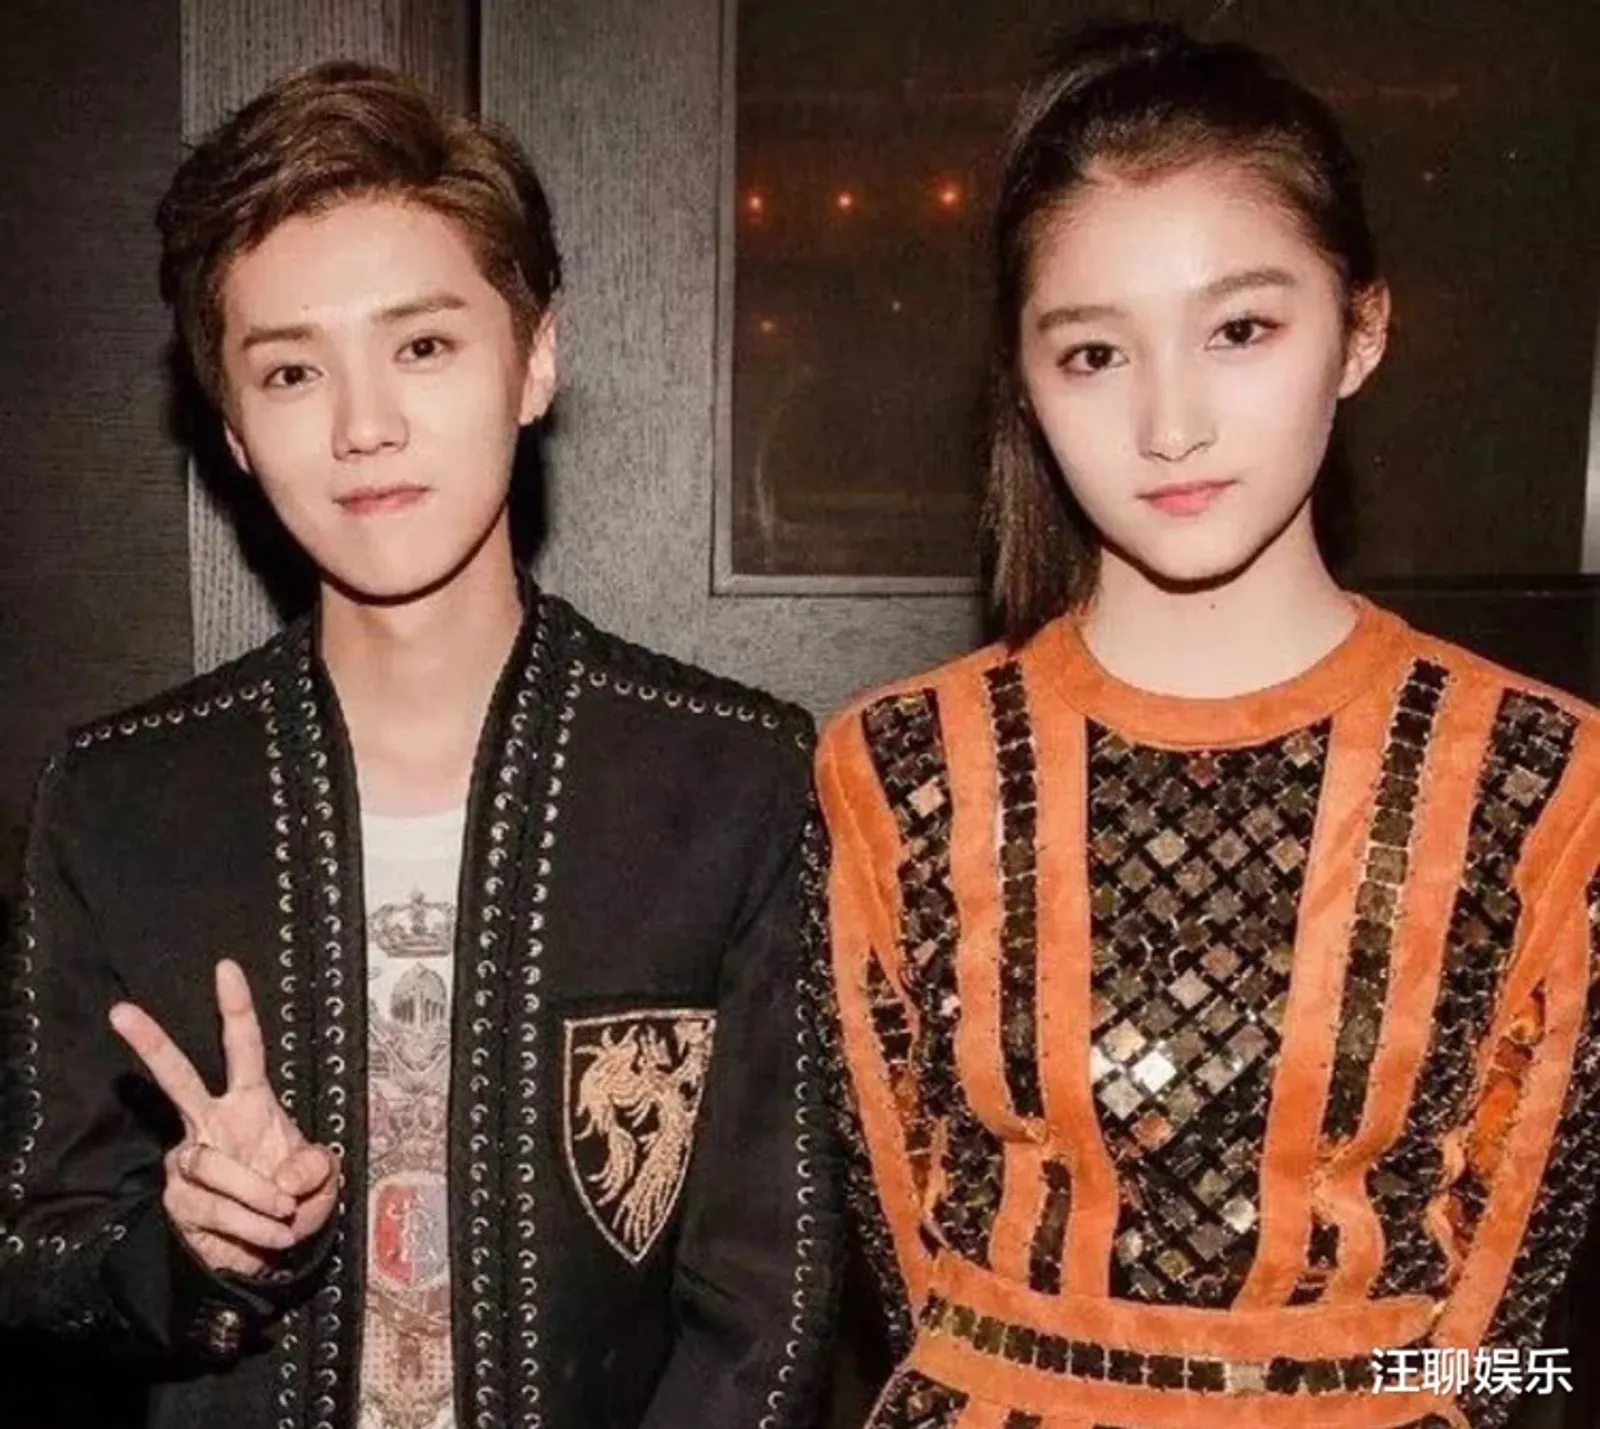 Dikabarkan Segera Nikah, Lika-Liku Cinta Luhan eks EXO & Guan Xiaotong